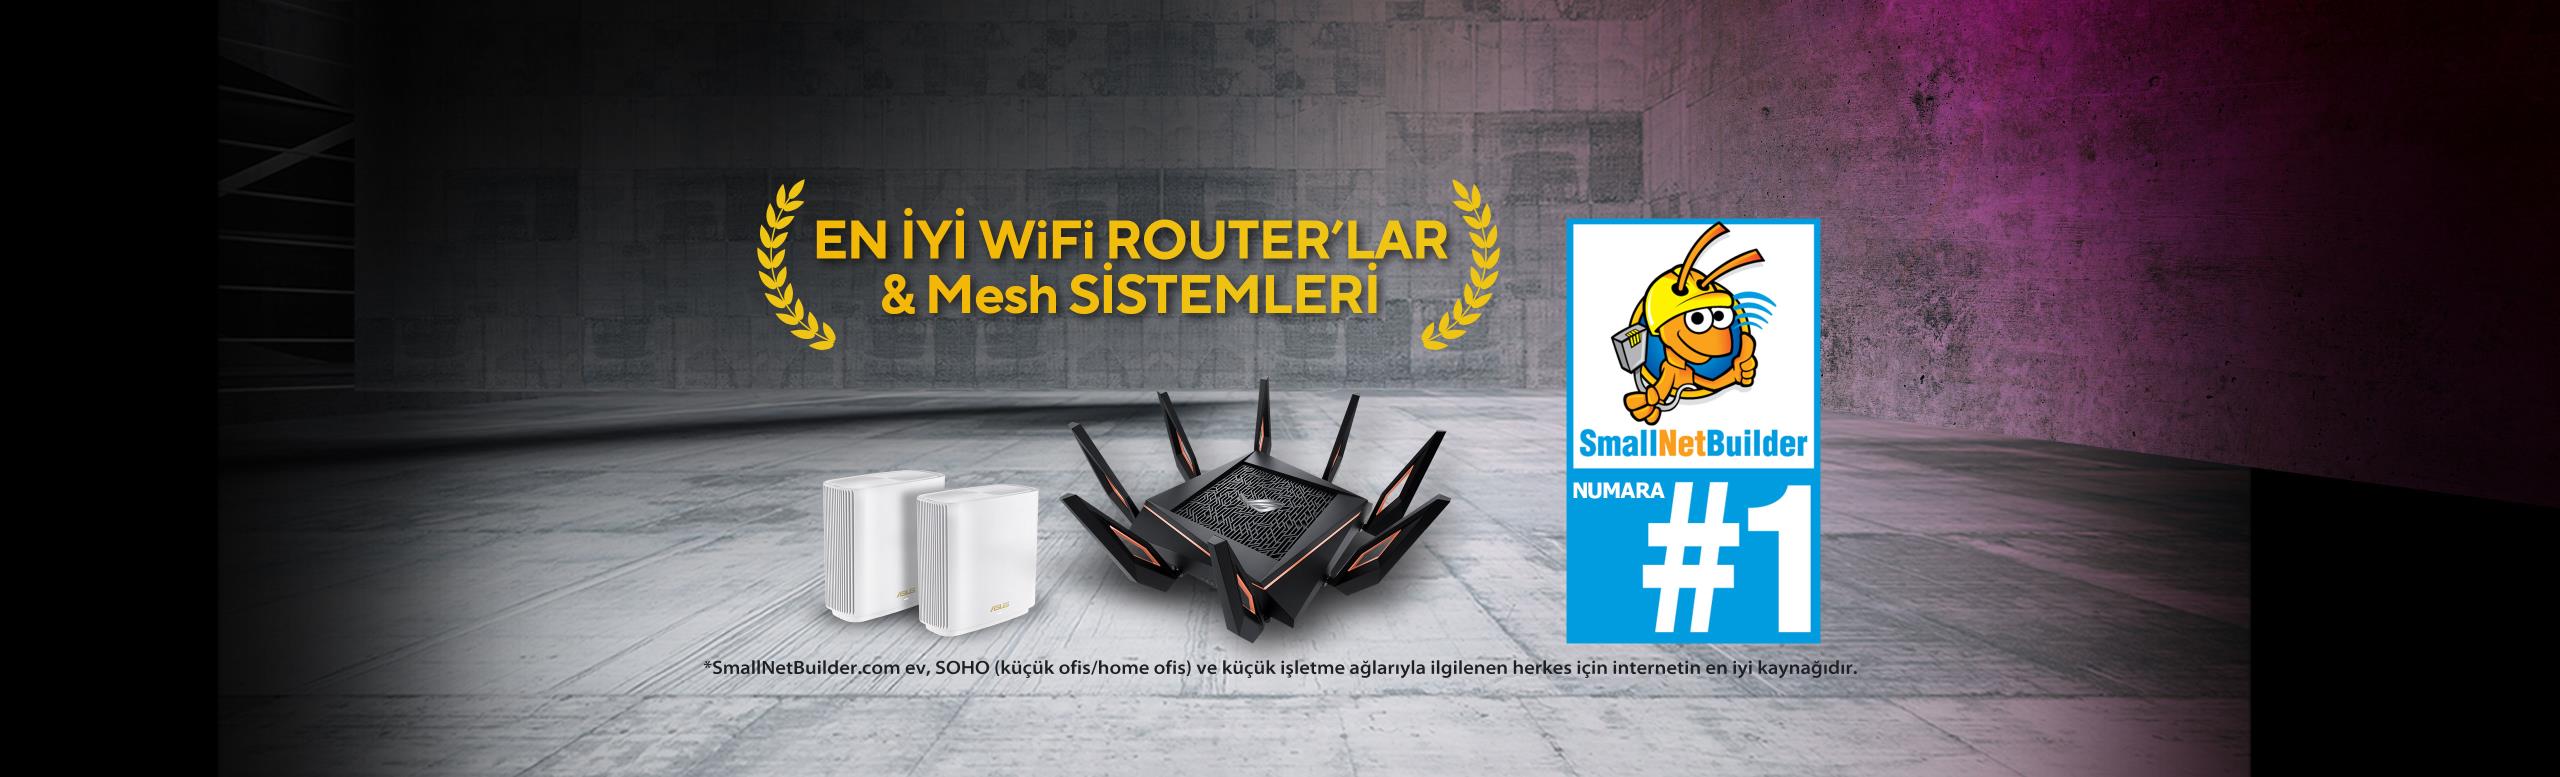 ASUS WiFi Router'lar ve Mesh Sistemleri SmallNetBuilder'da 1. Sırada